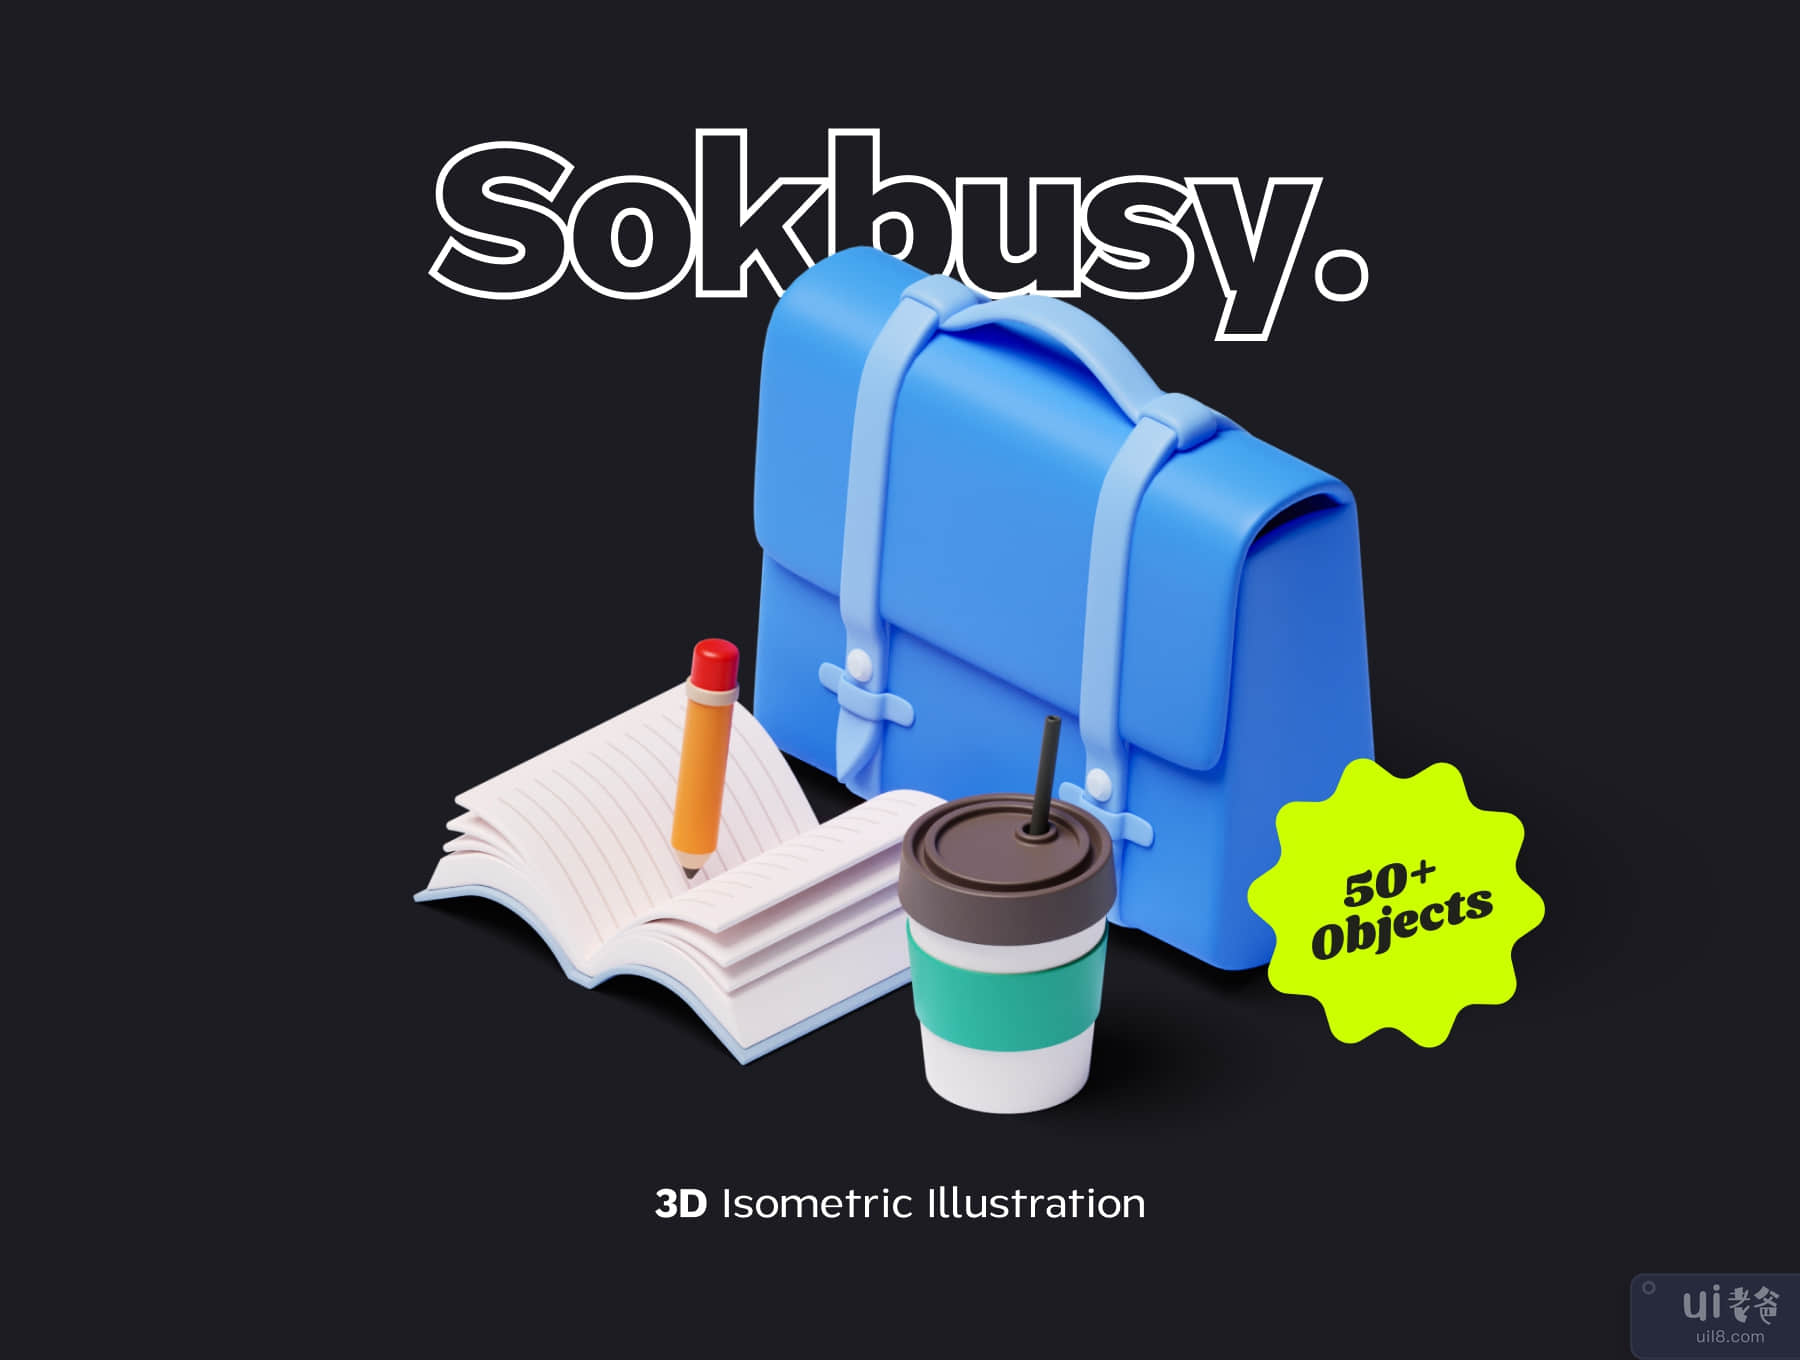 索克布西 - 等距插图 (Sokbusy - Isometric Illustration)插图7